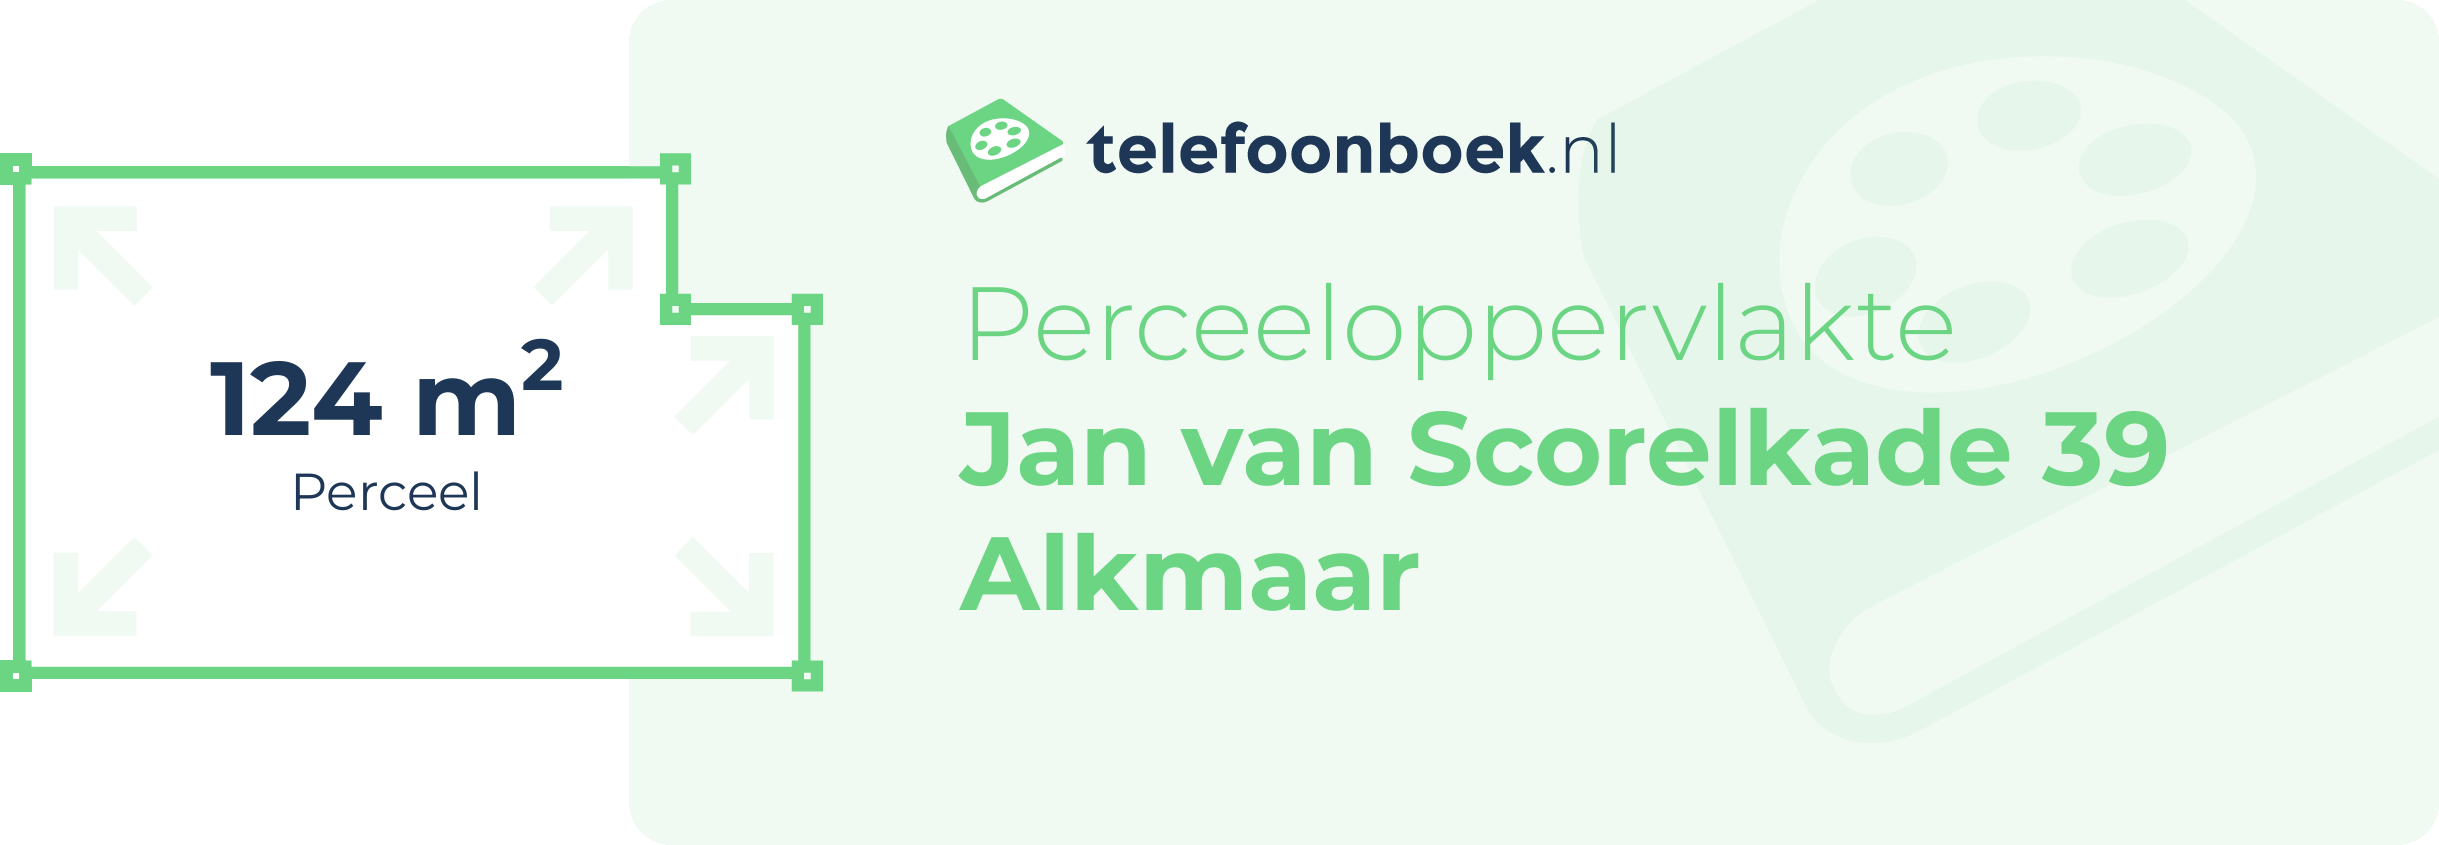 Perceeloppervlakte Jan Van Scorelkade 39 Alkmaar